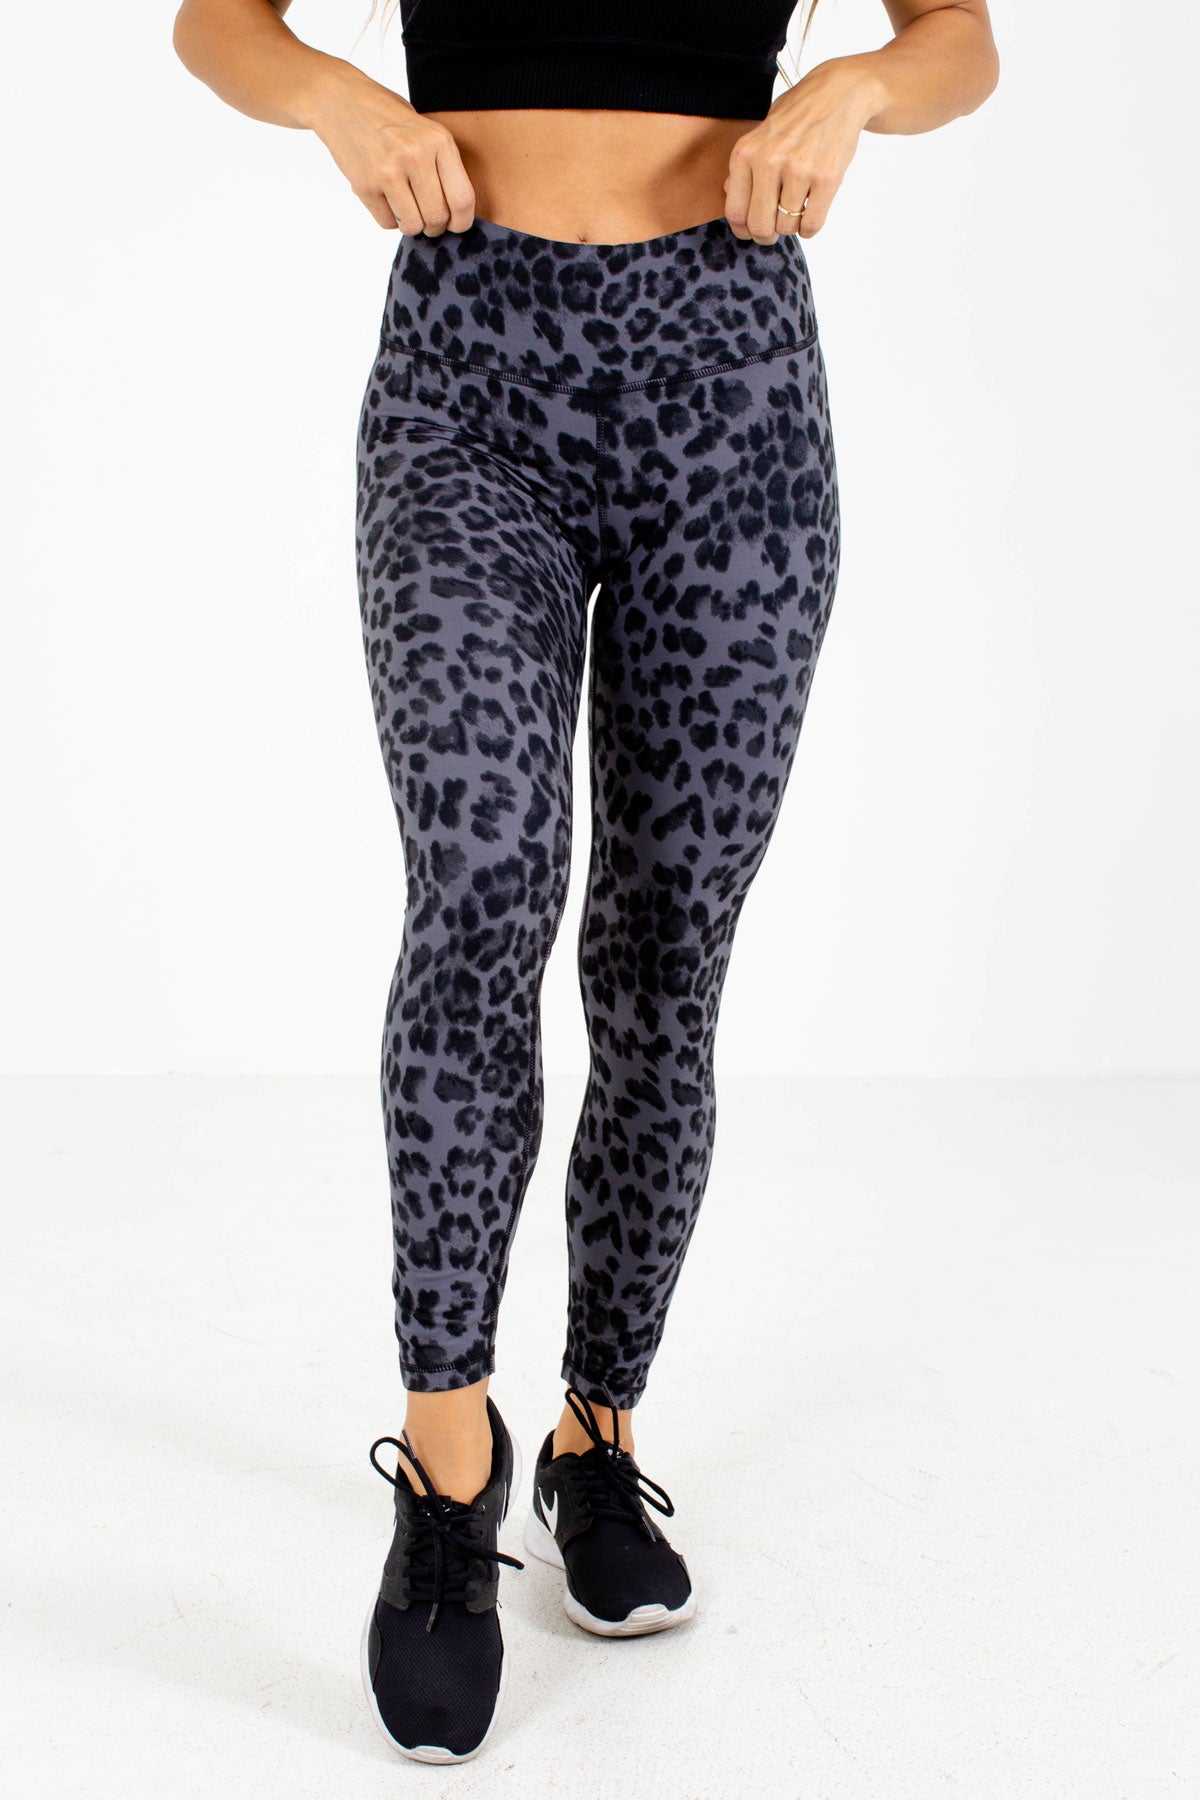 climate right Animal Print Leopard Print Multi Color Black Leggings Size M  - 38% off